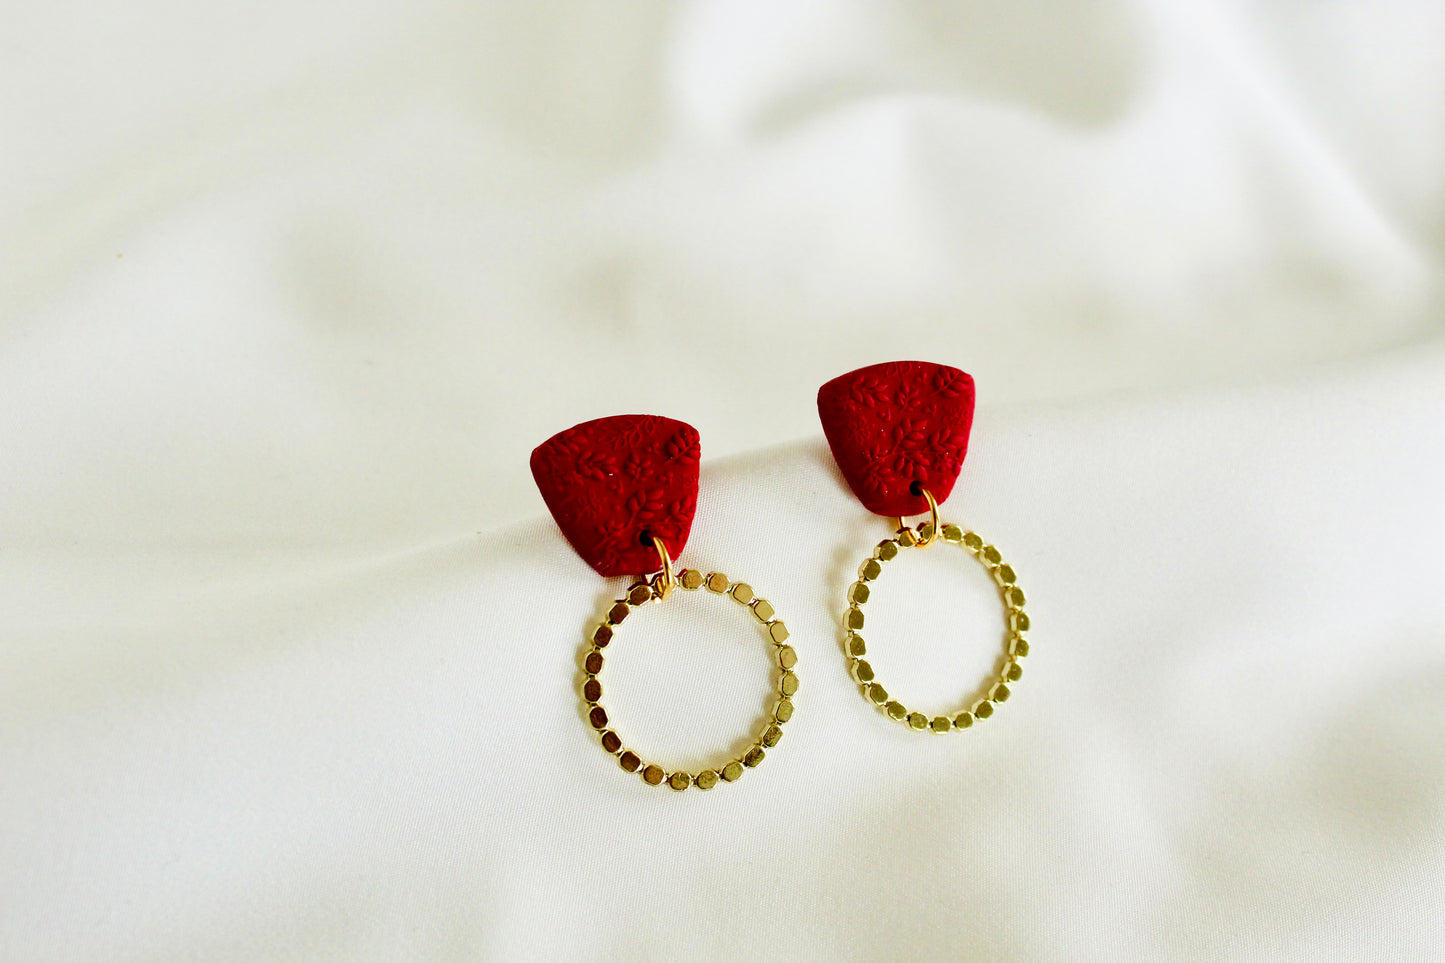 Red elegant statement earrings